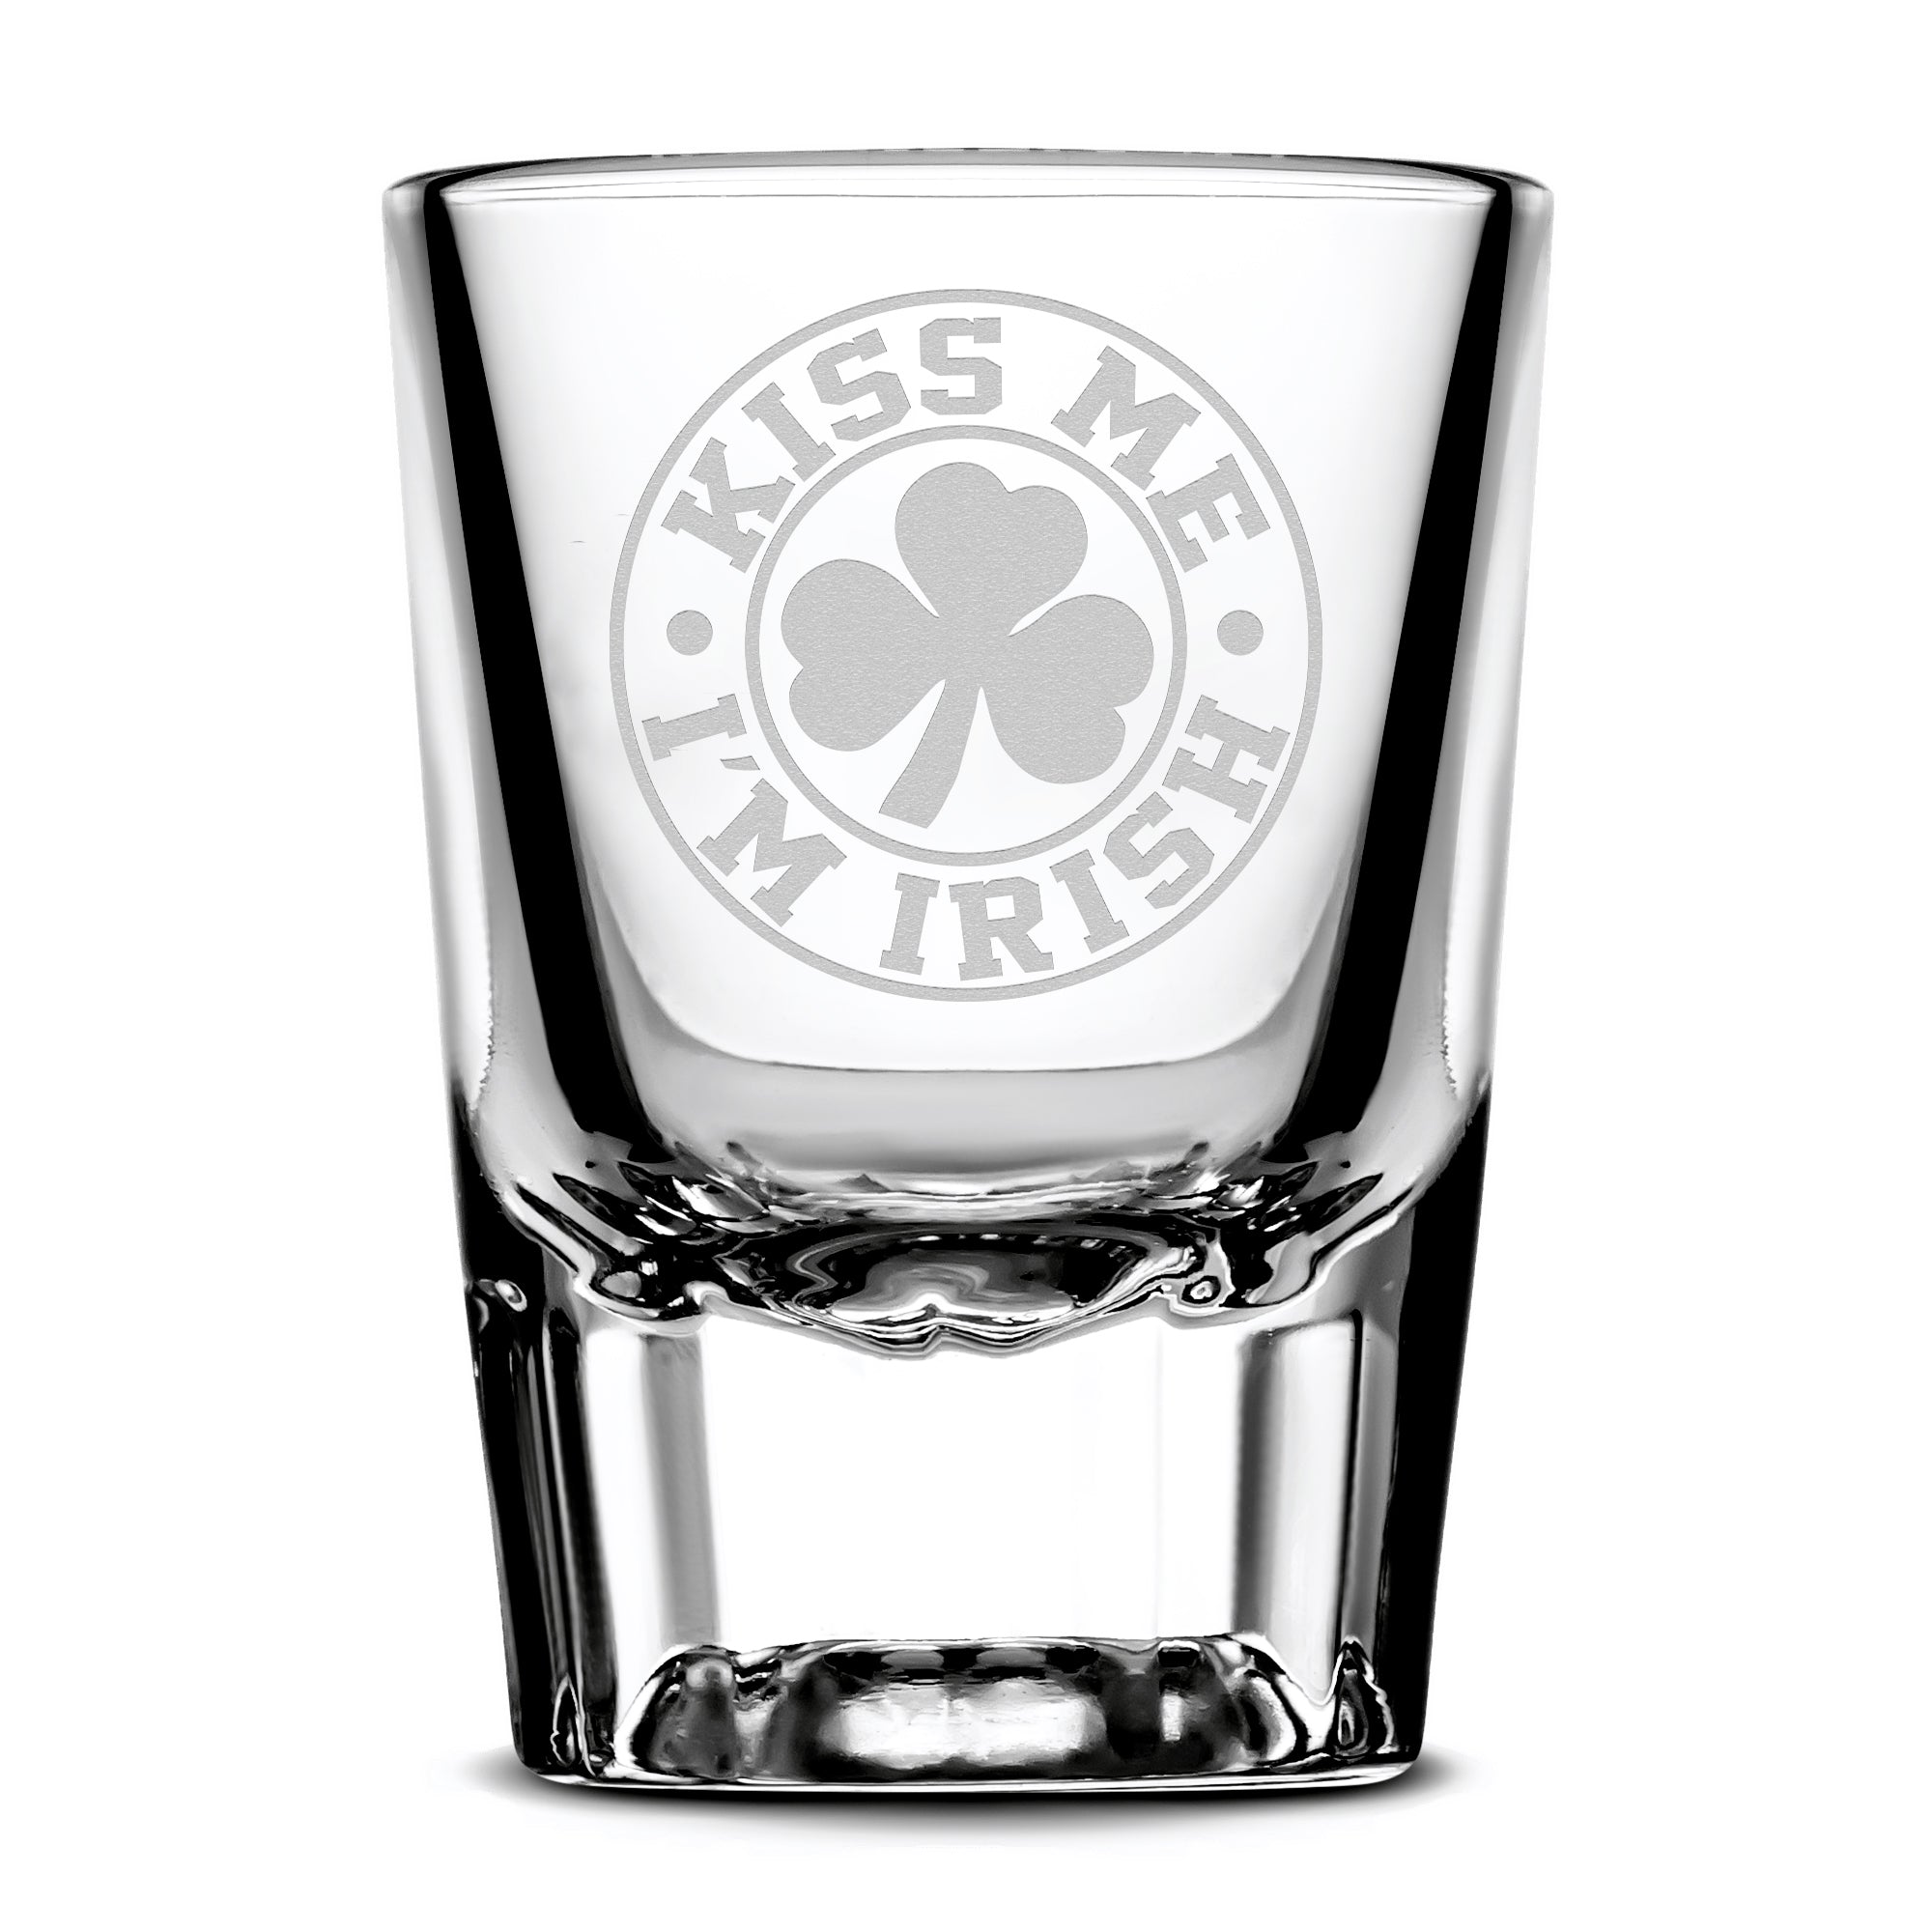 Premium Etched Shot Glass, Kiss Me I'm Irish, 2oz